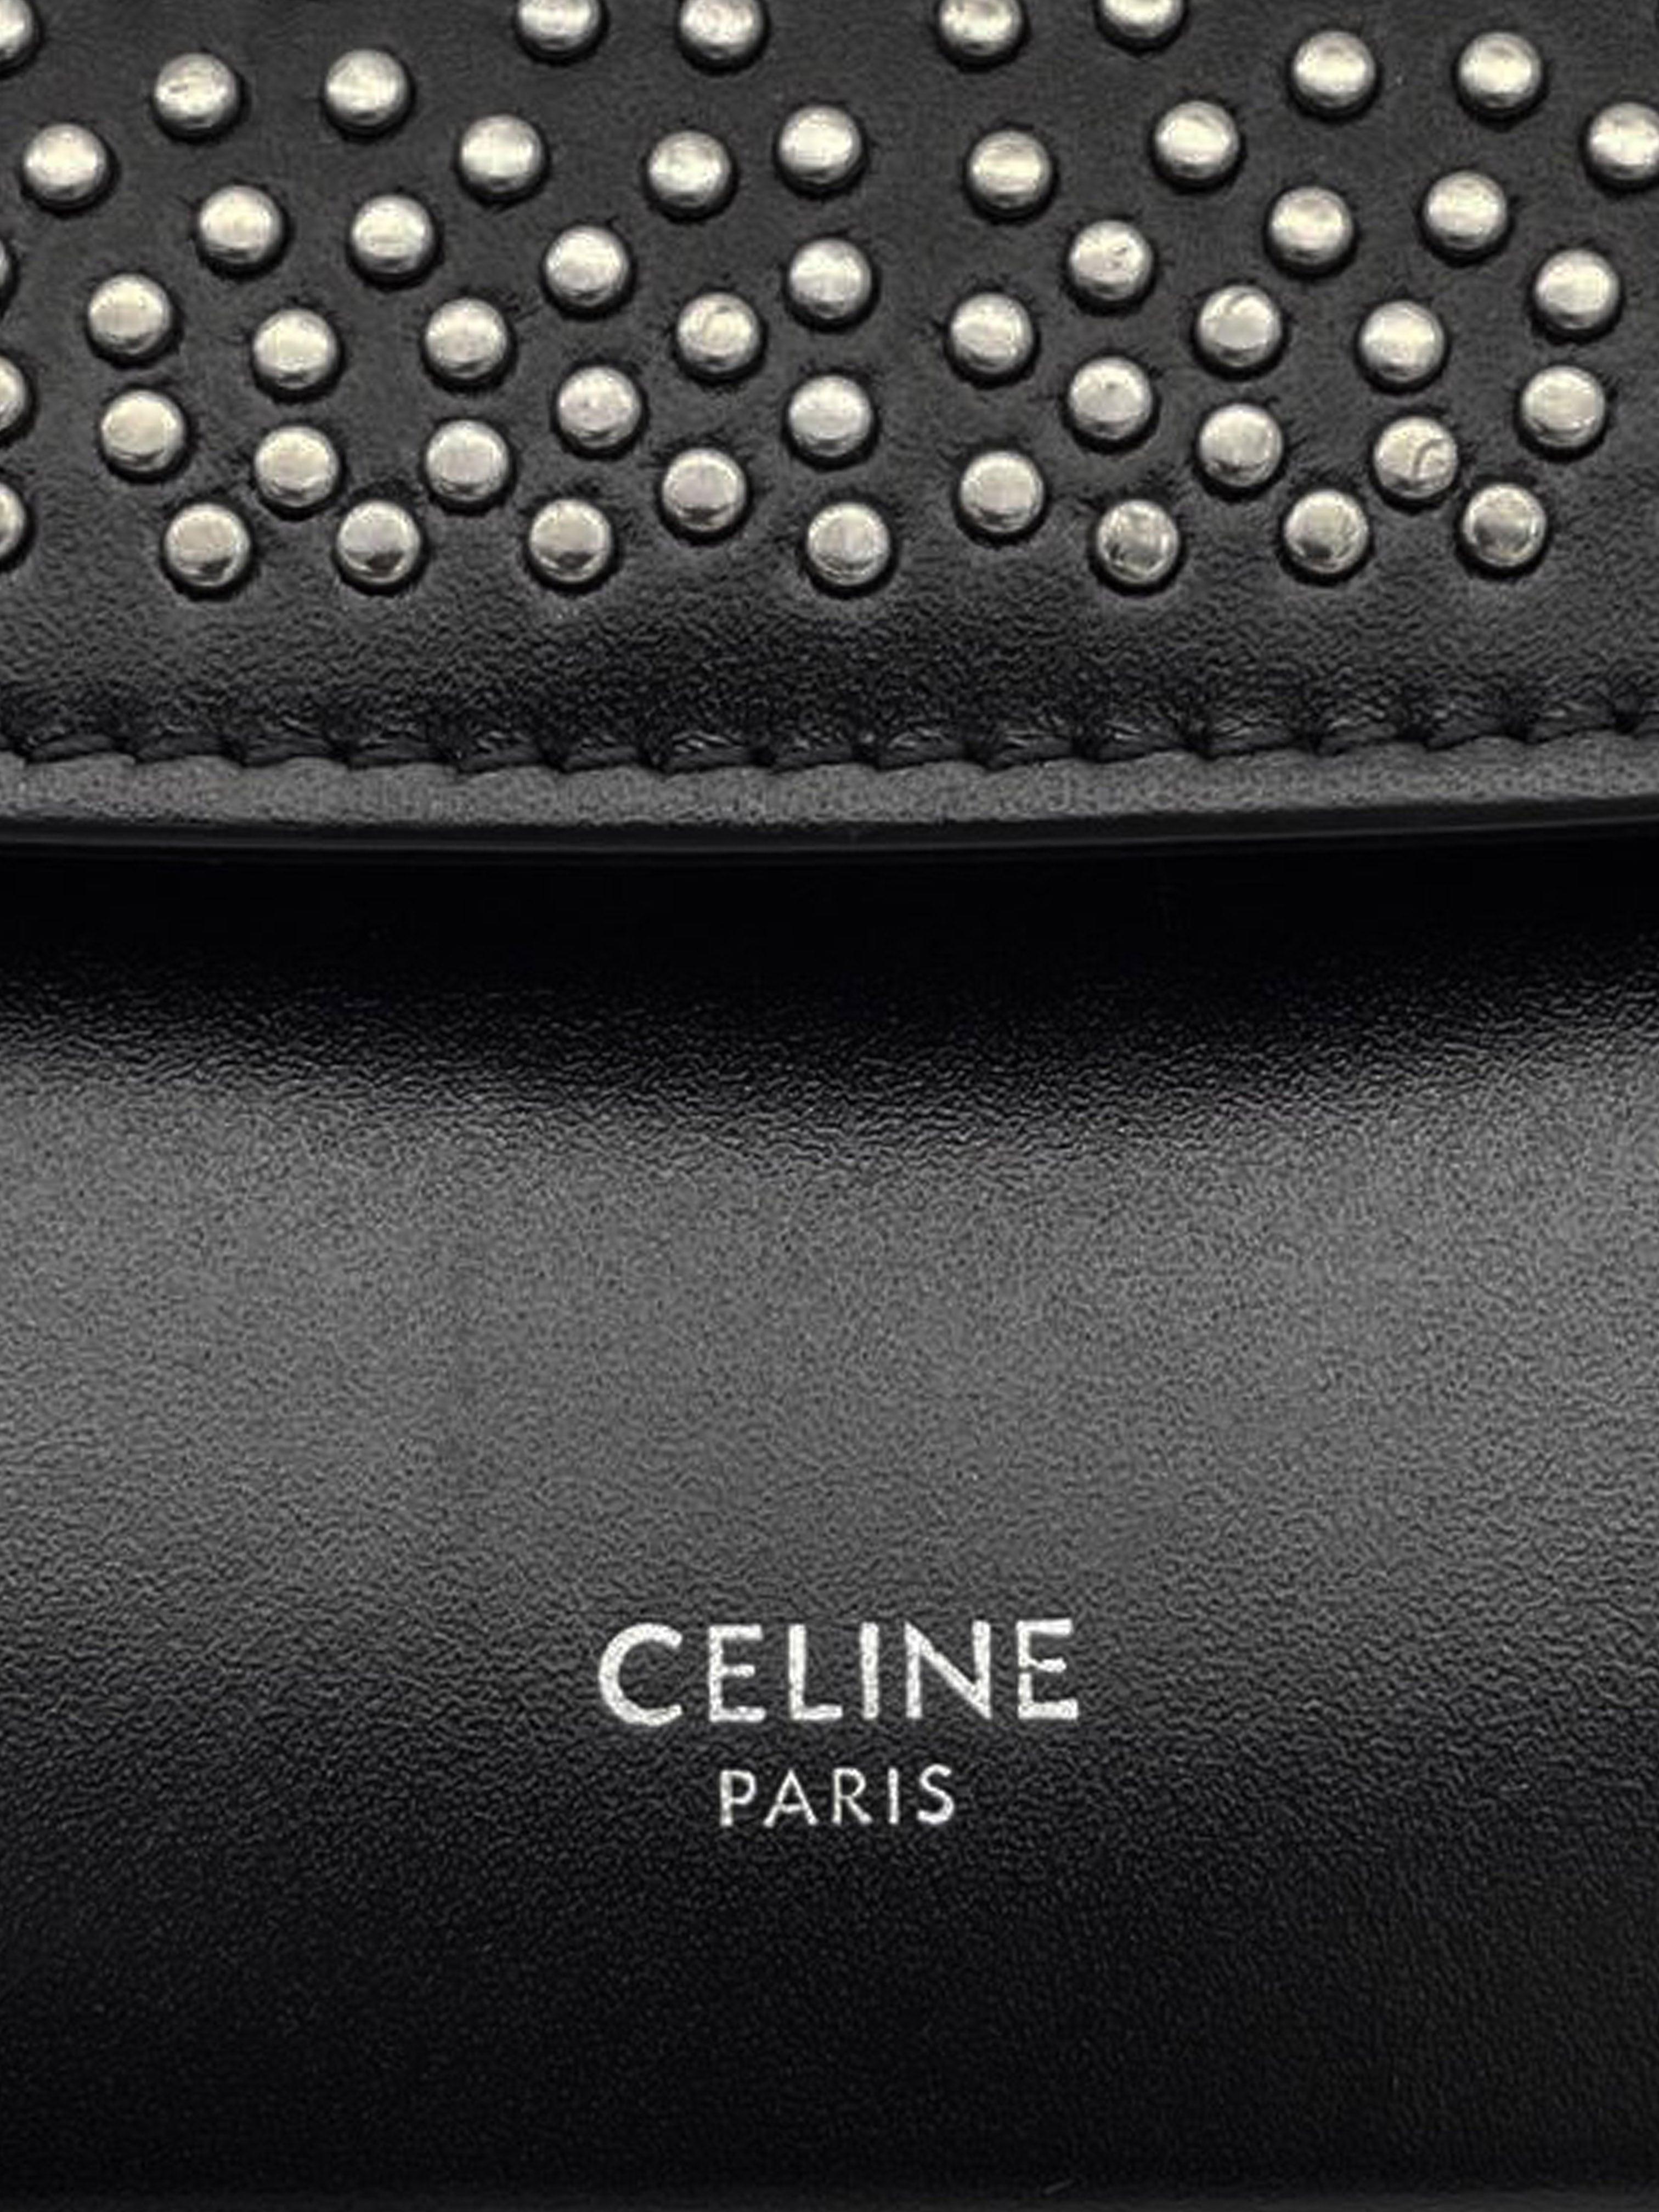 Celine SS 2019 Studded Evening Clutch